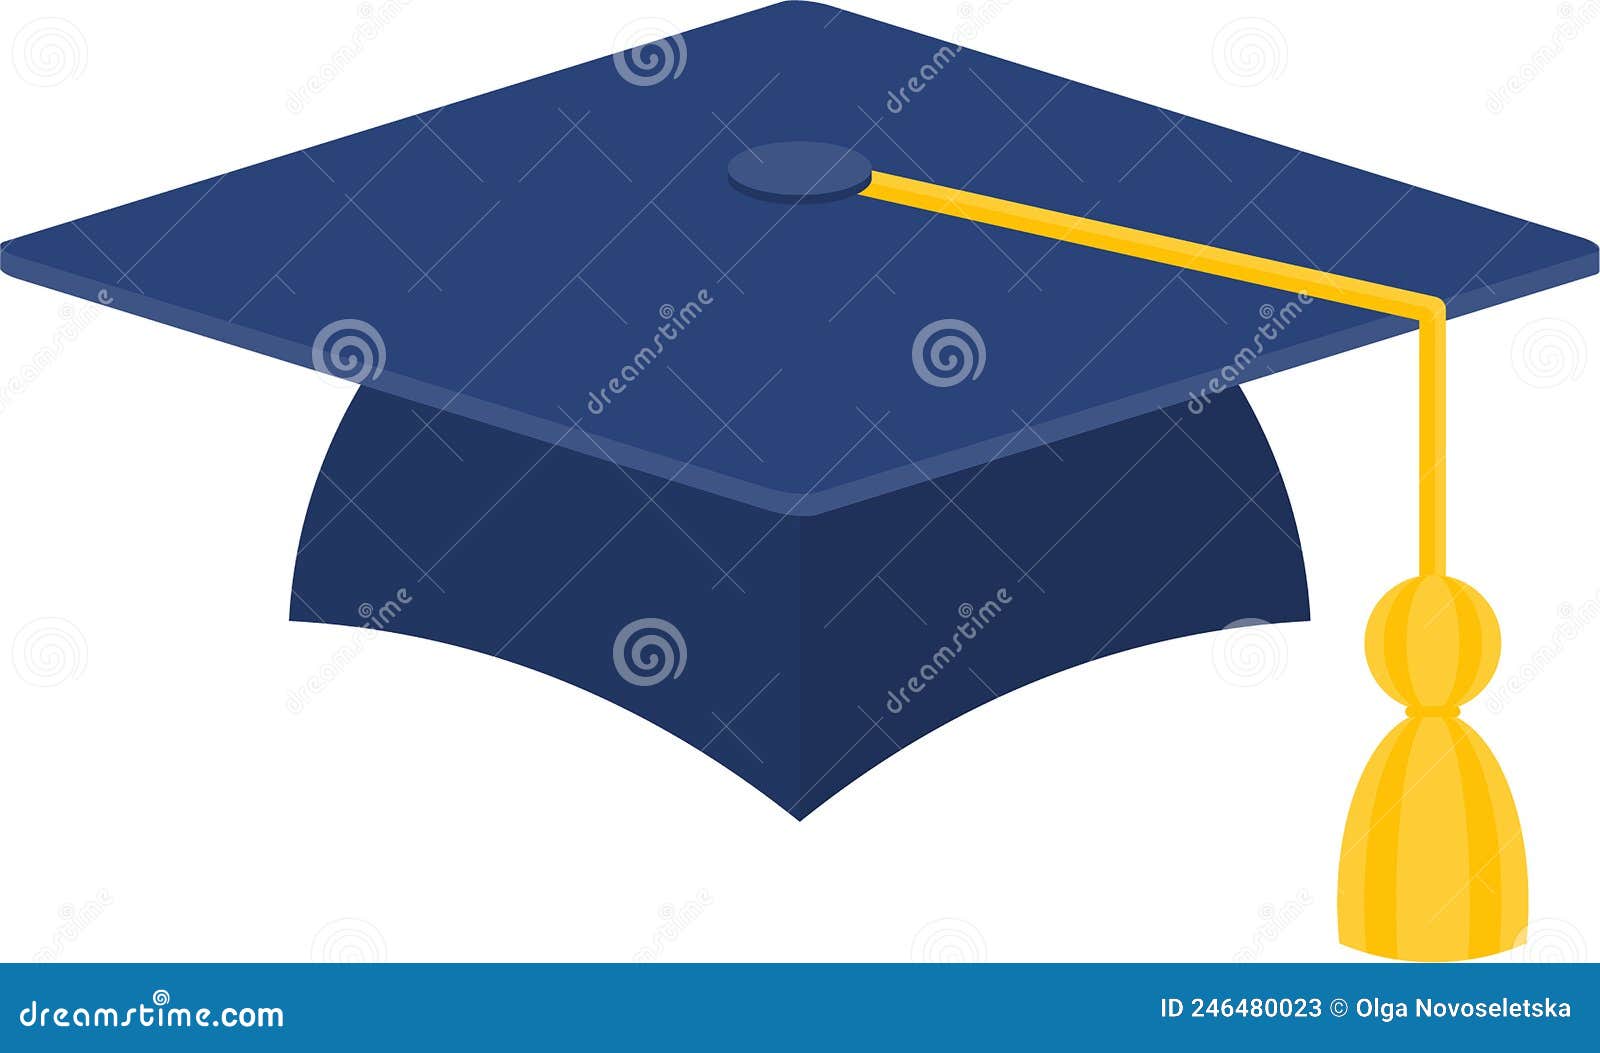 Graduation Black Logo. University Graduate Cap with Diploma. Stock ...